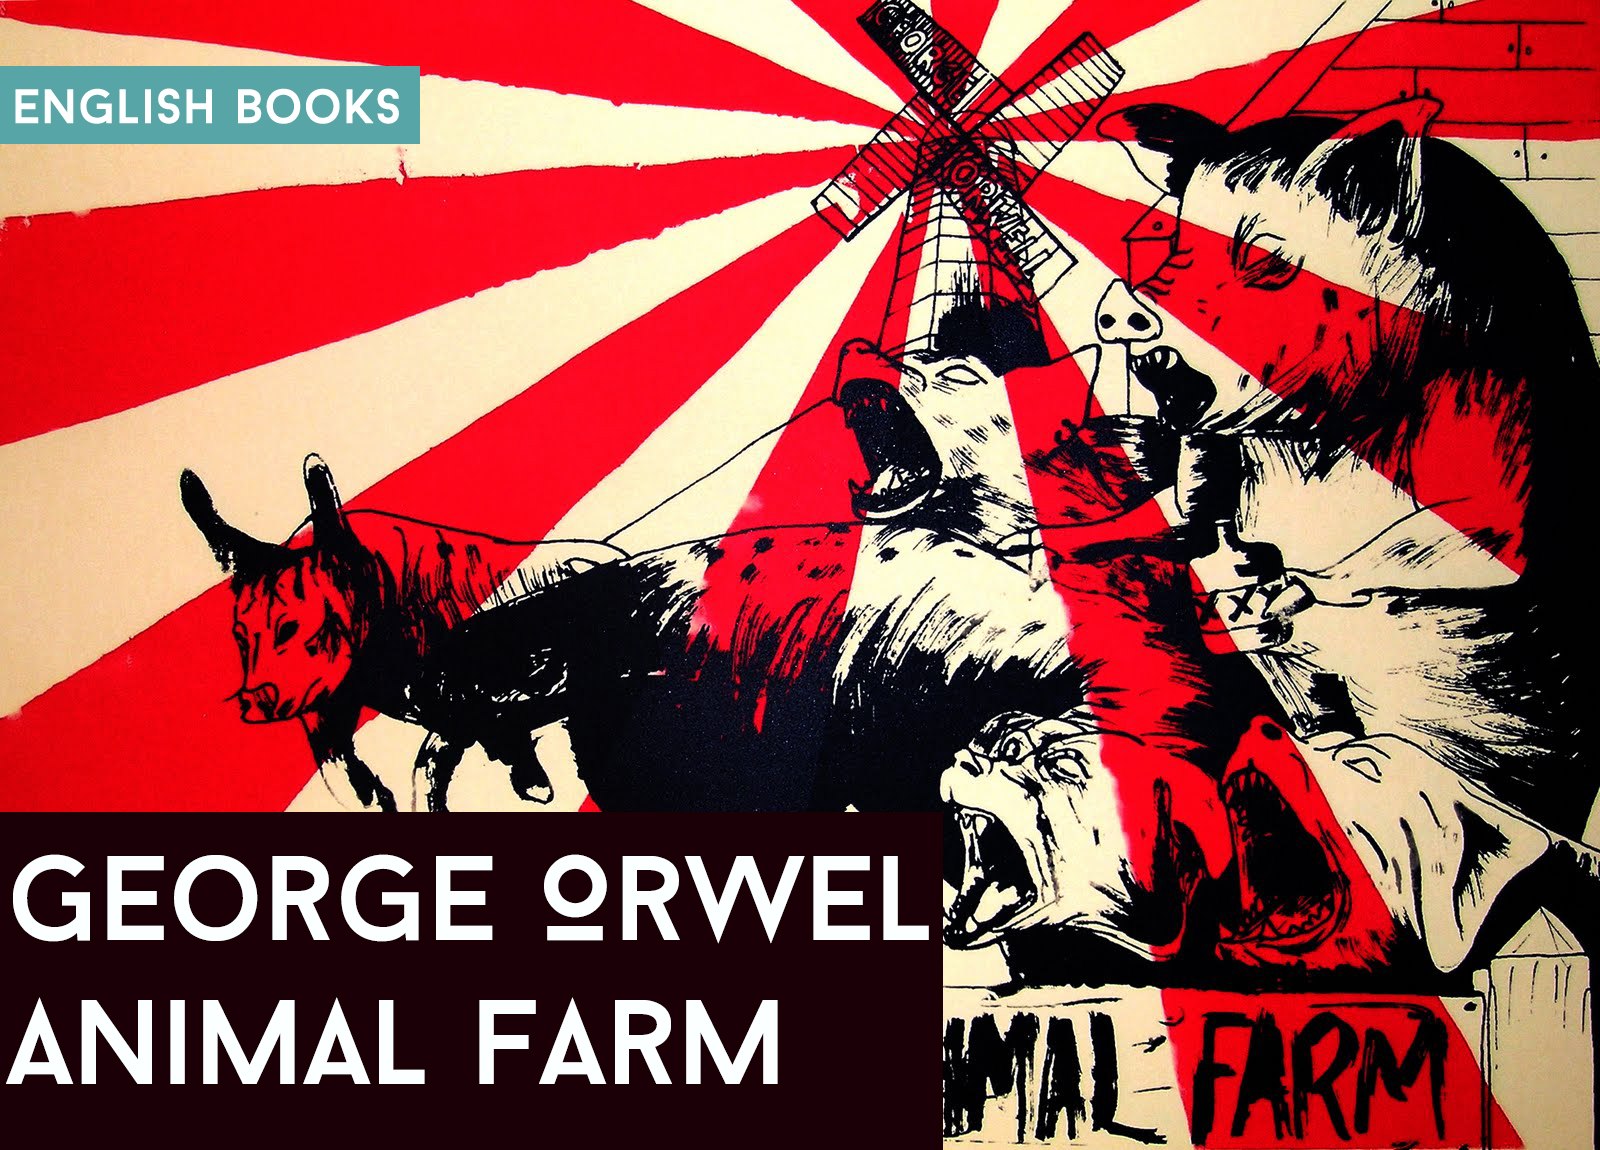 George Orwel — Animal Farm read and download epub, pdf, fb2, mobi